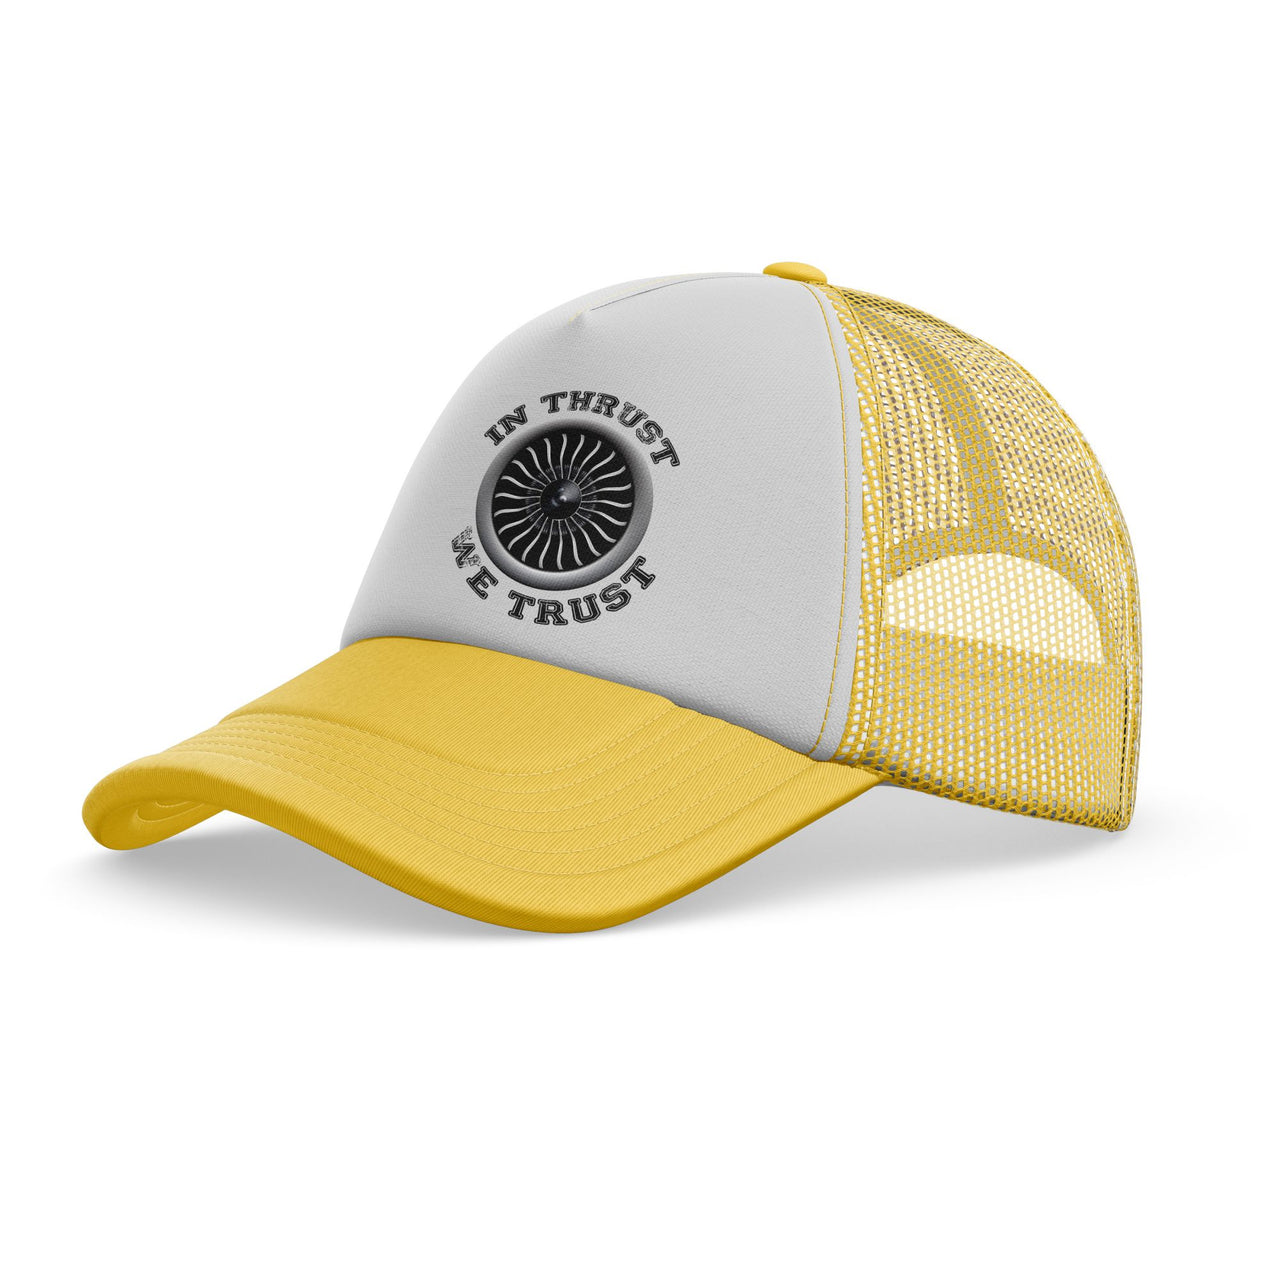 In Thrust We Trust (Vol 2) Designed Trucker Caps & Hats